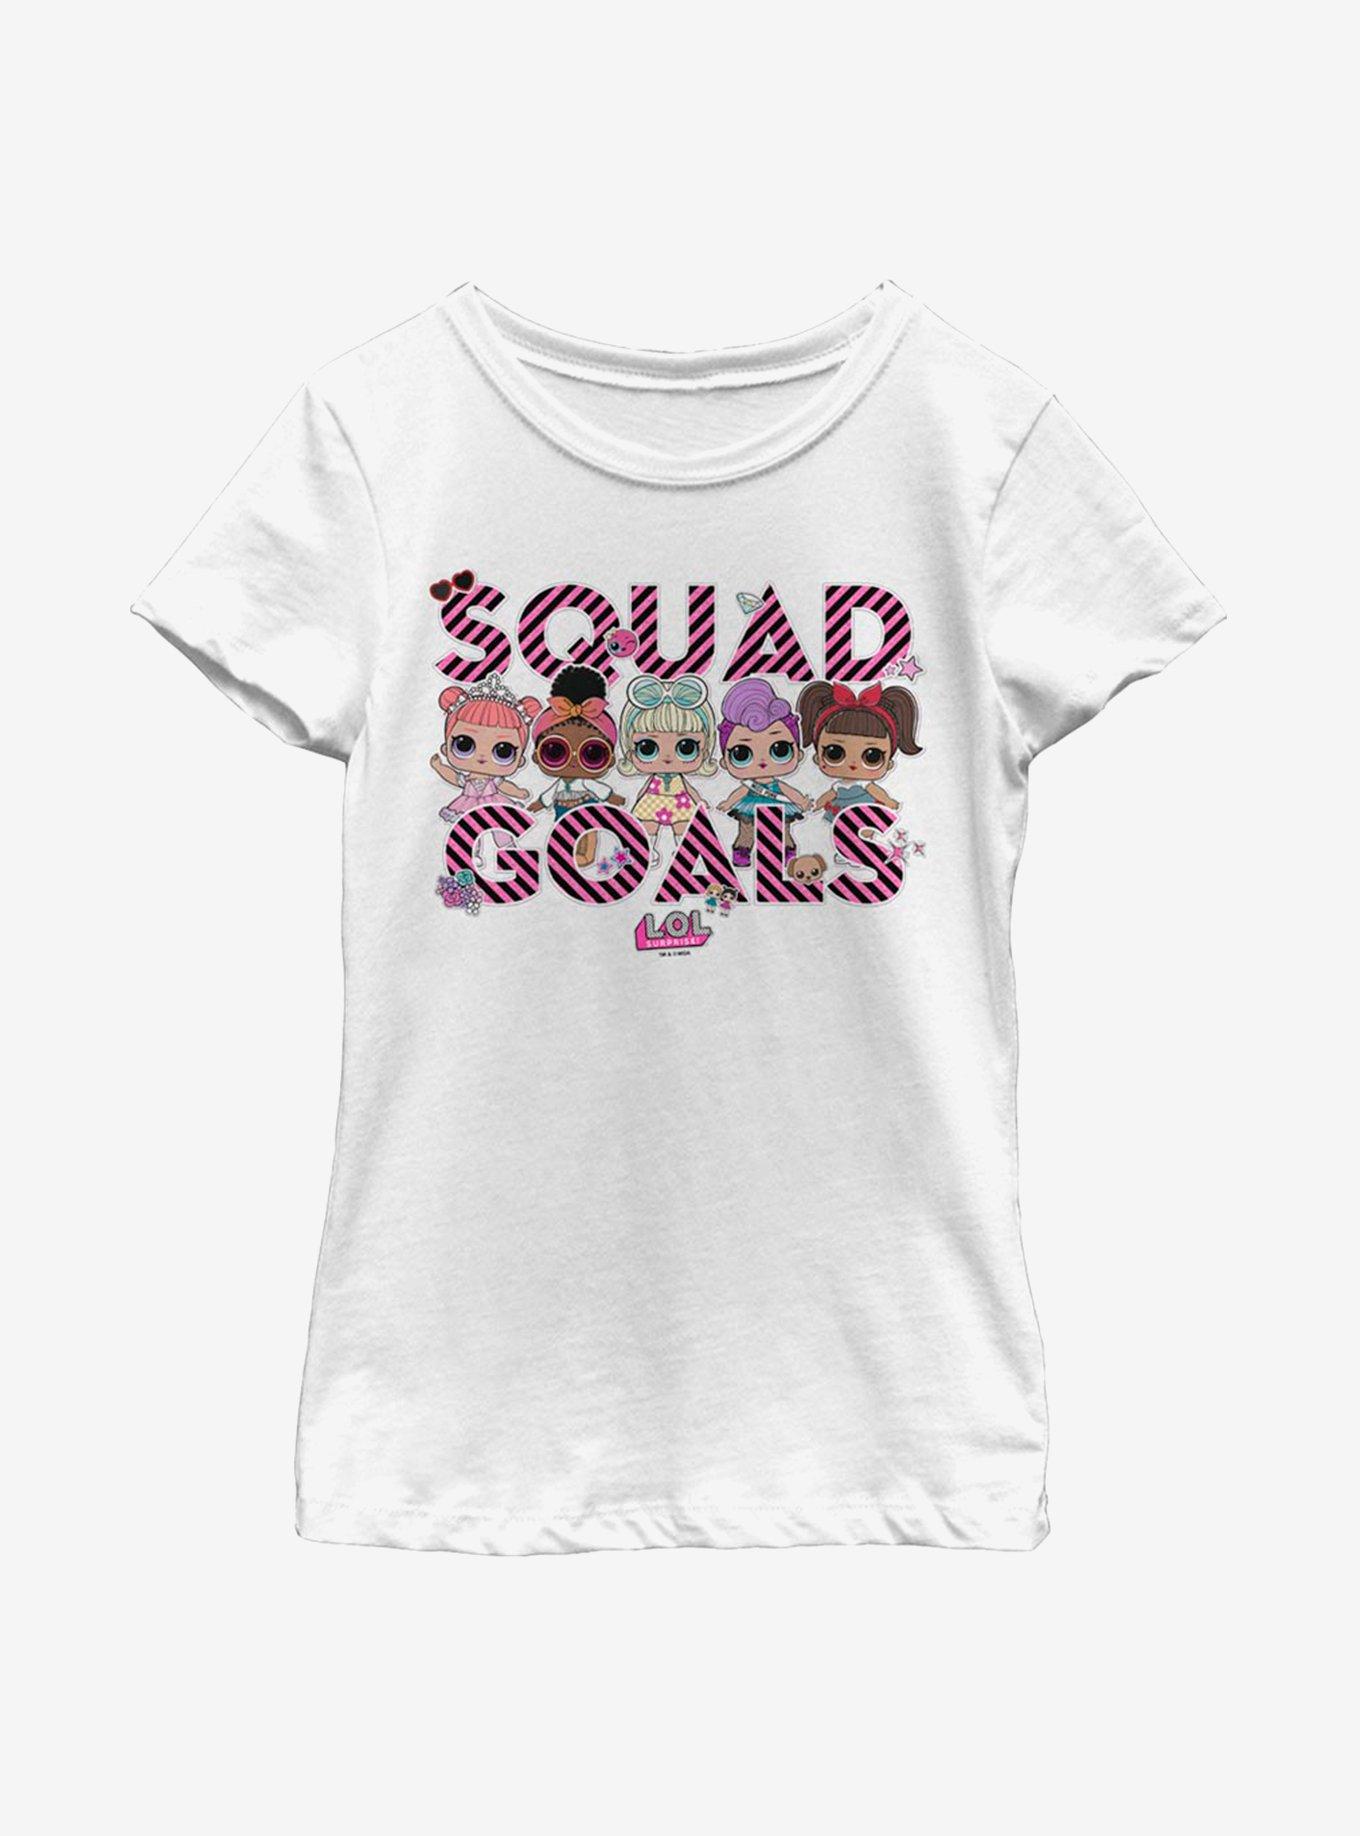 L.O.L. Surprise! LOL Squad Goals Youth Girls T-Shirt, WHITE, hi-res